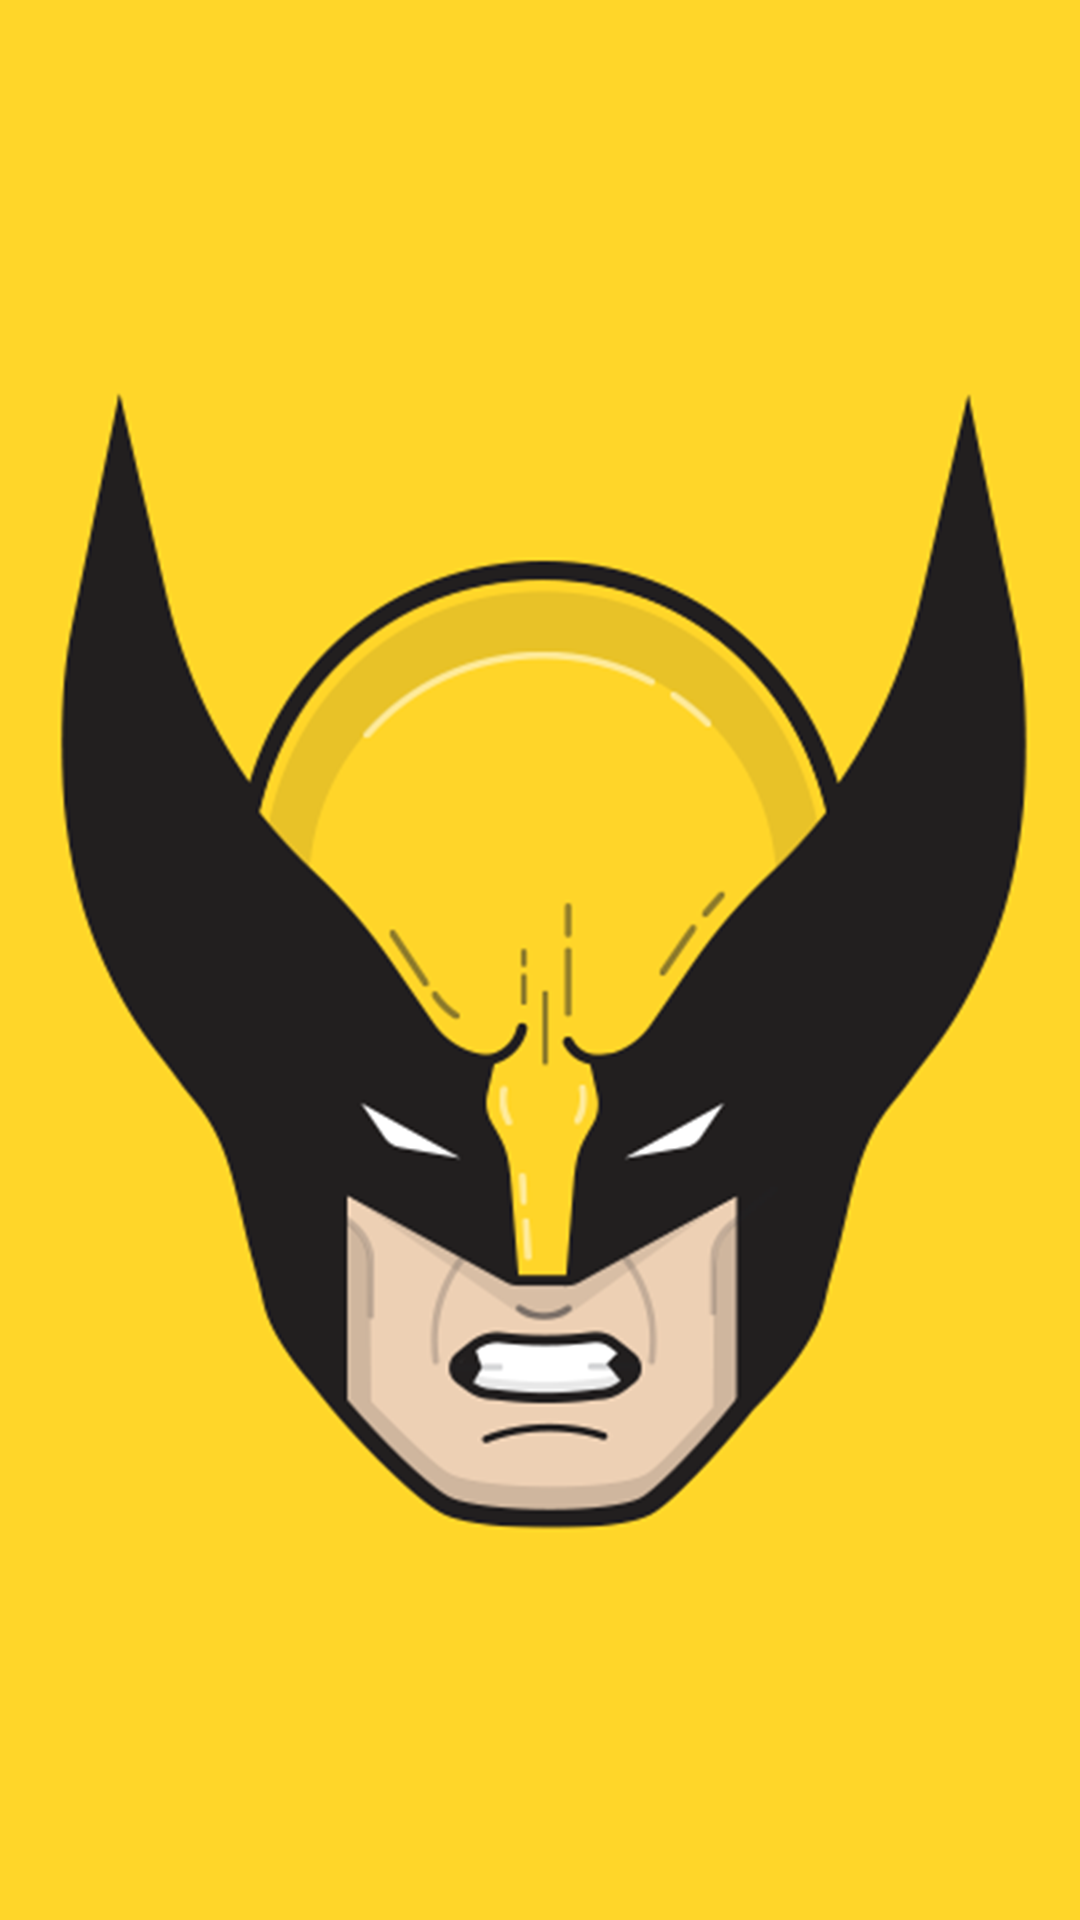 Wallpaper, illustration, logo, Wolverine, cartoon, superhero, head 1080x1920